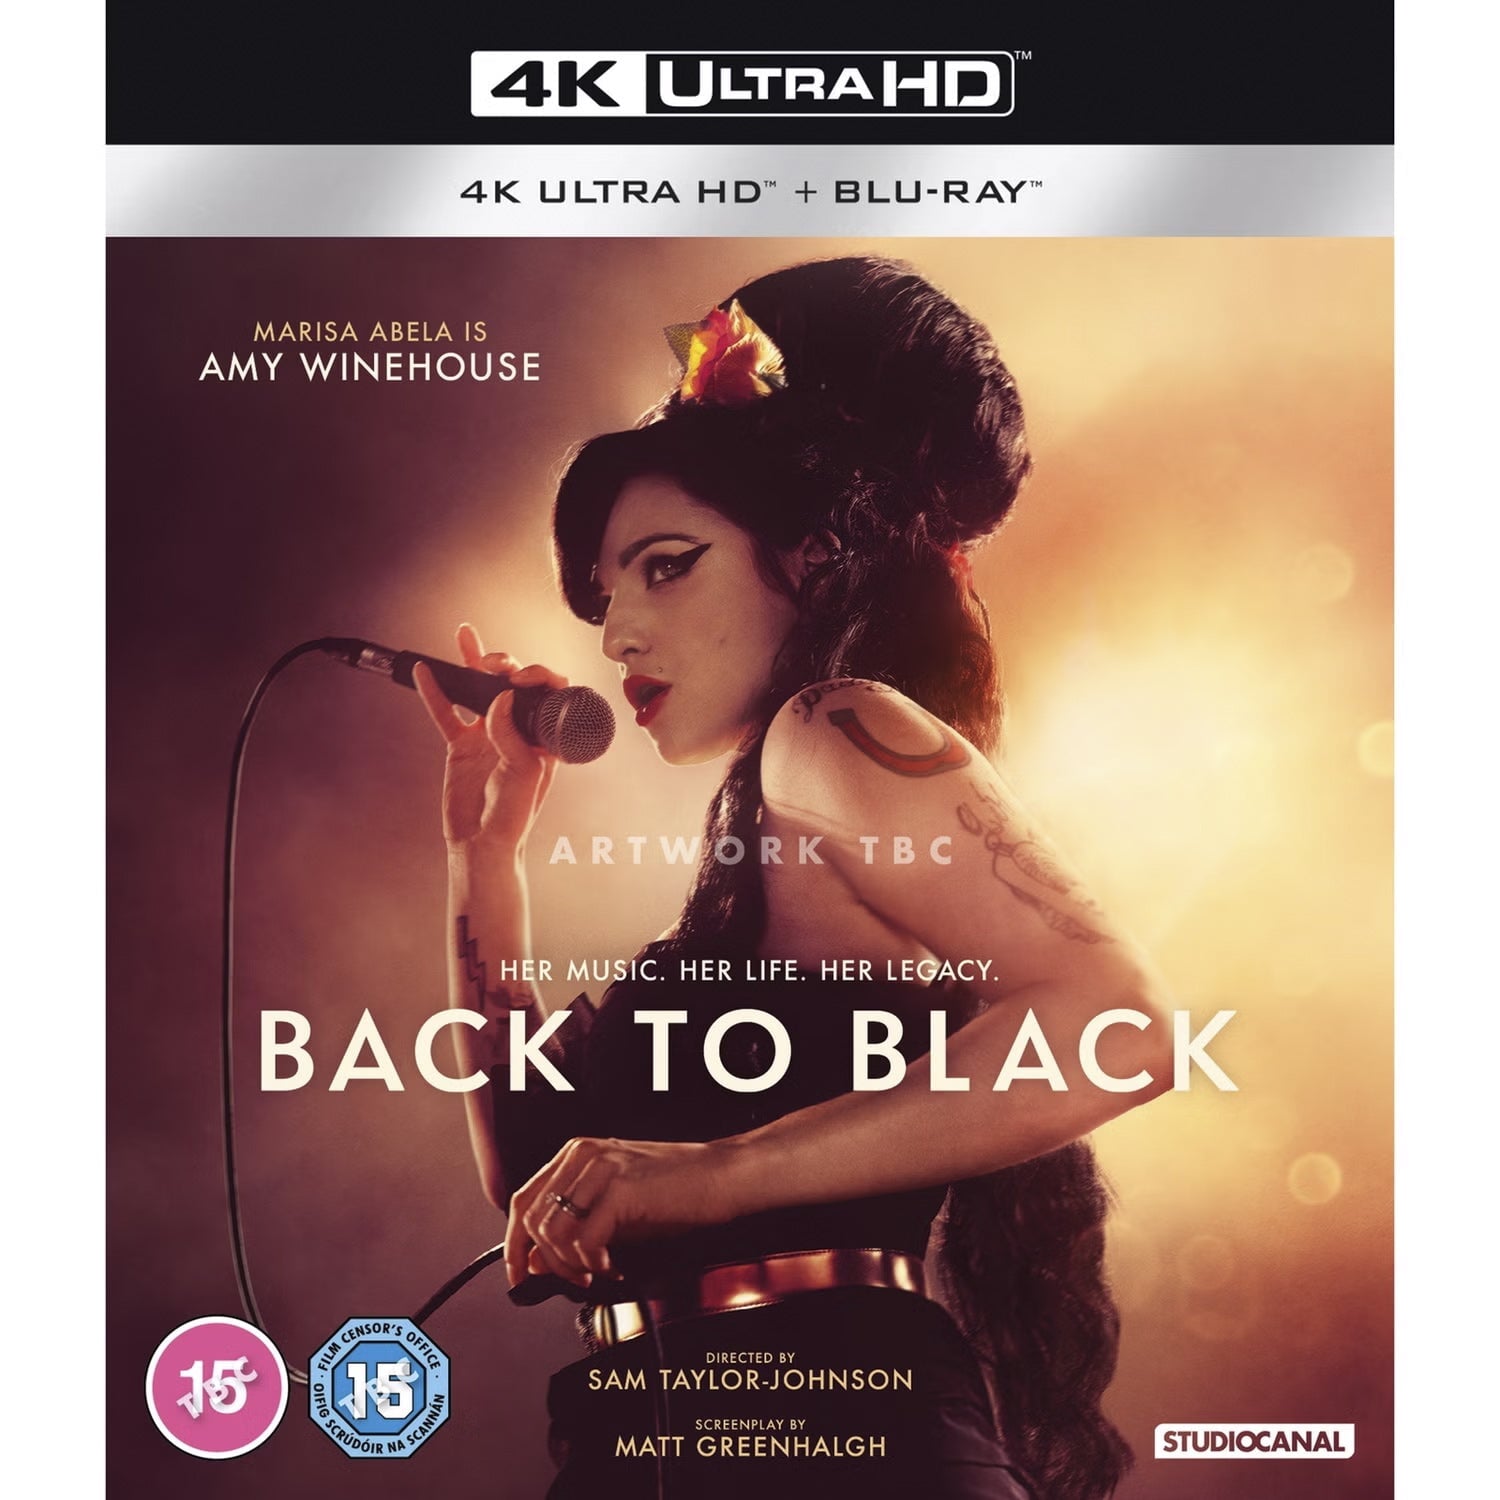 Coming soon on 4K UHD & Blu-ray – tagged 